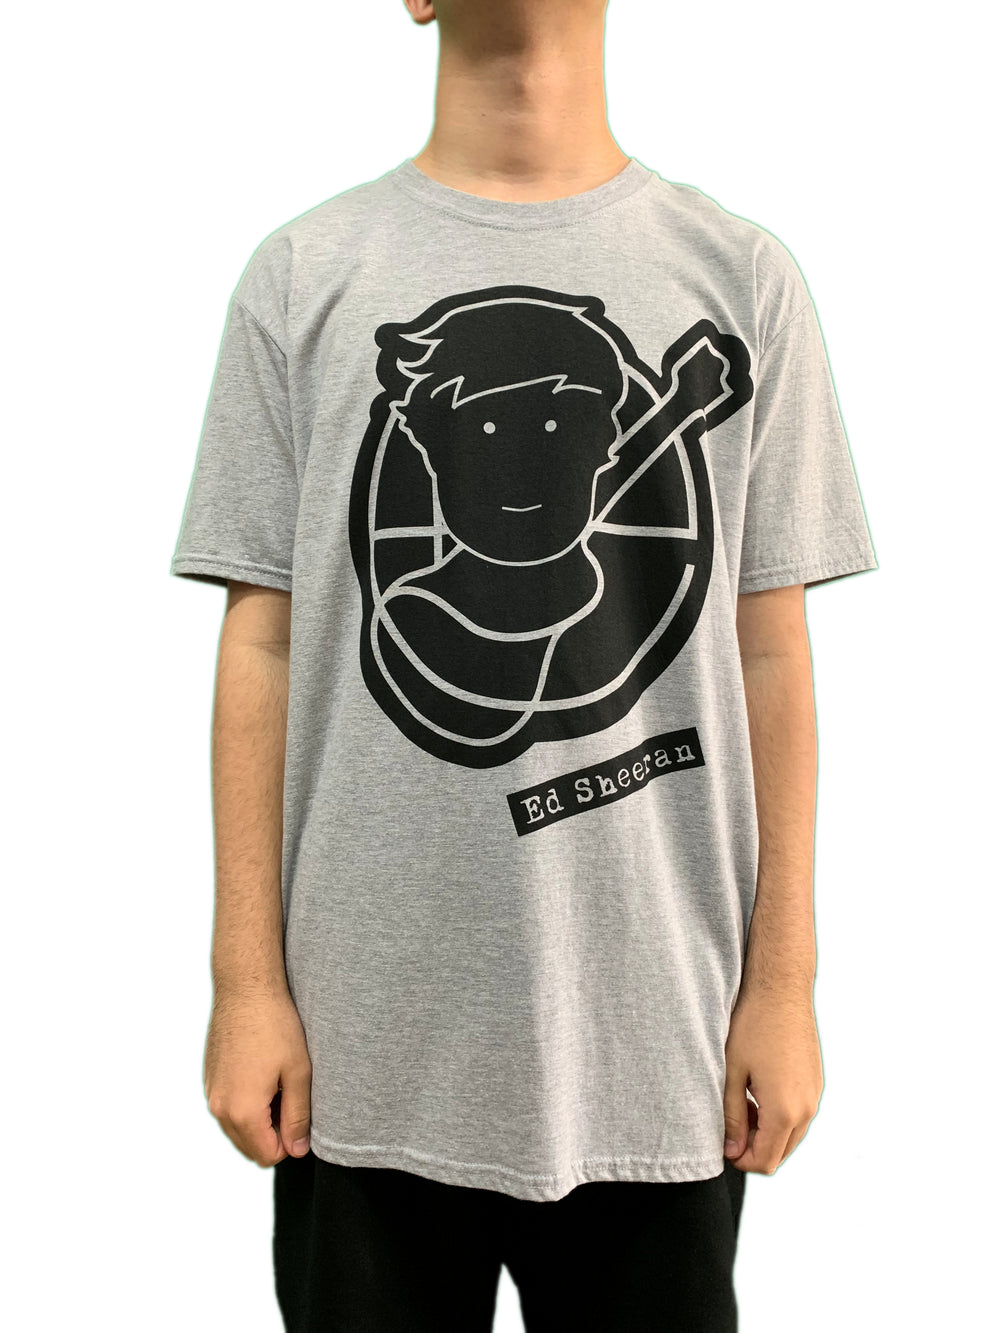 Ed Sheeran Pictogram Unisex Official T Shirt Brand New Various Sizes